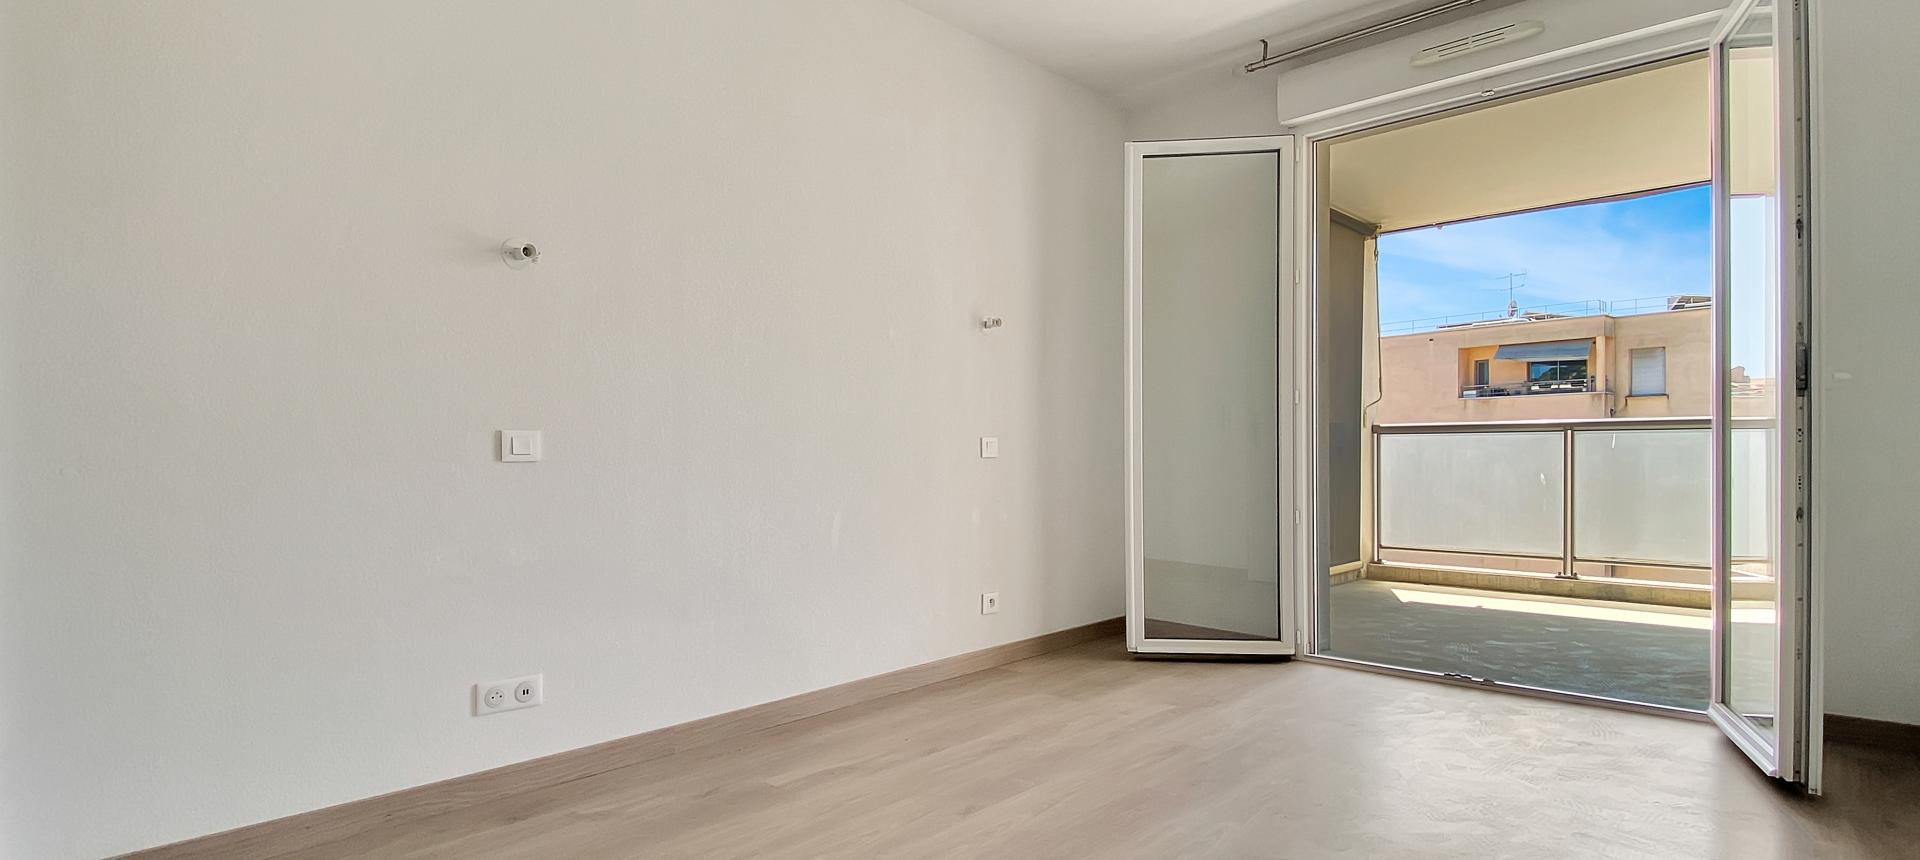 Vente Appartement F2 avec terrasse à Ajaccio - Secteur Rocade